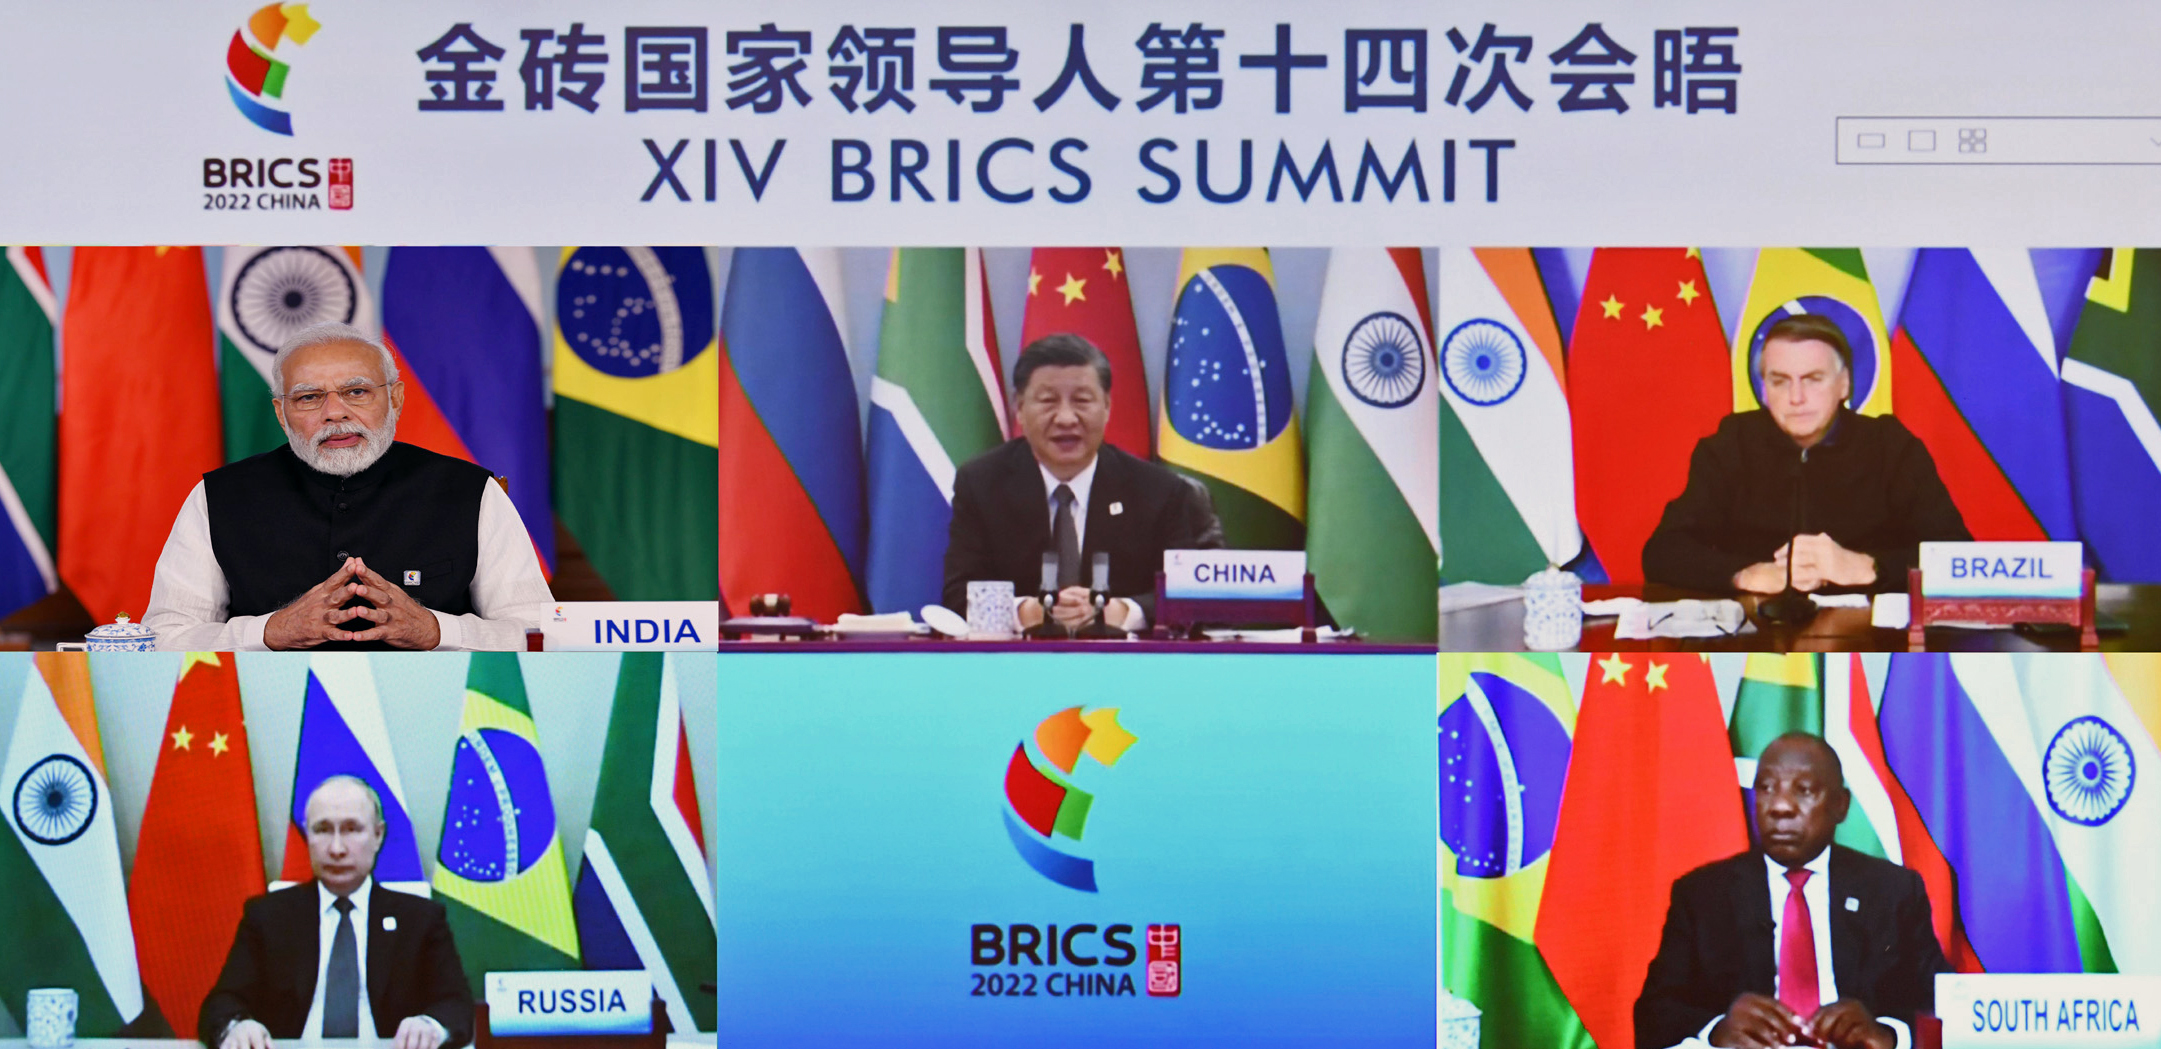 At BRICS 2022, Modi joins Xi and Putin in seeking new governance of global economy